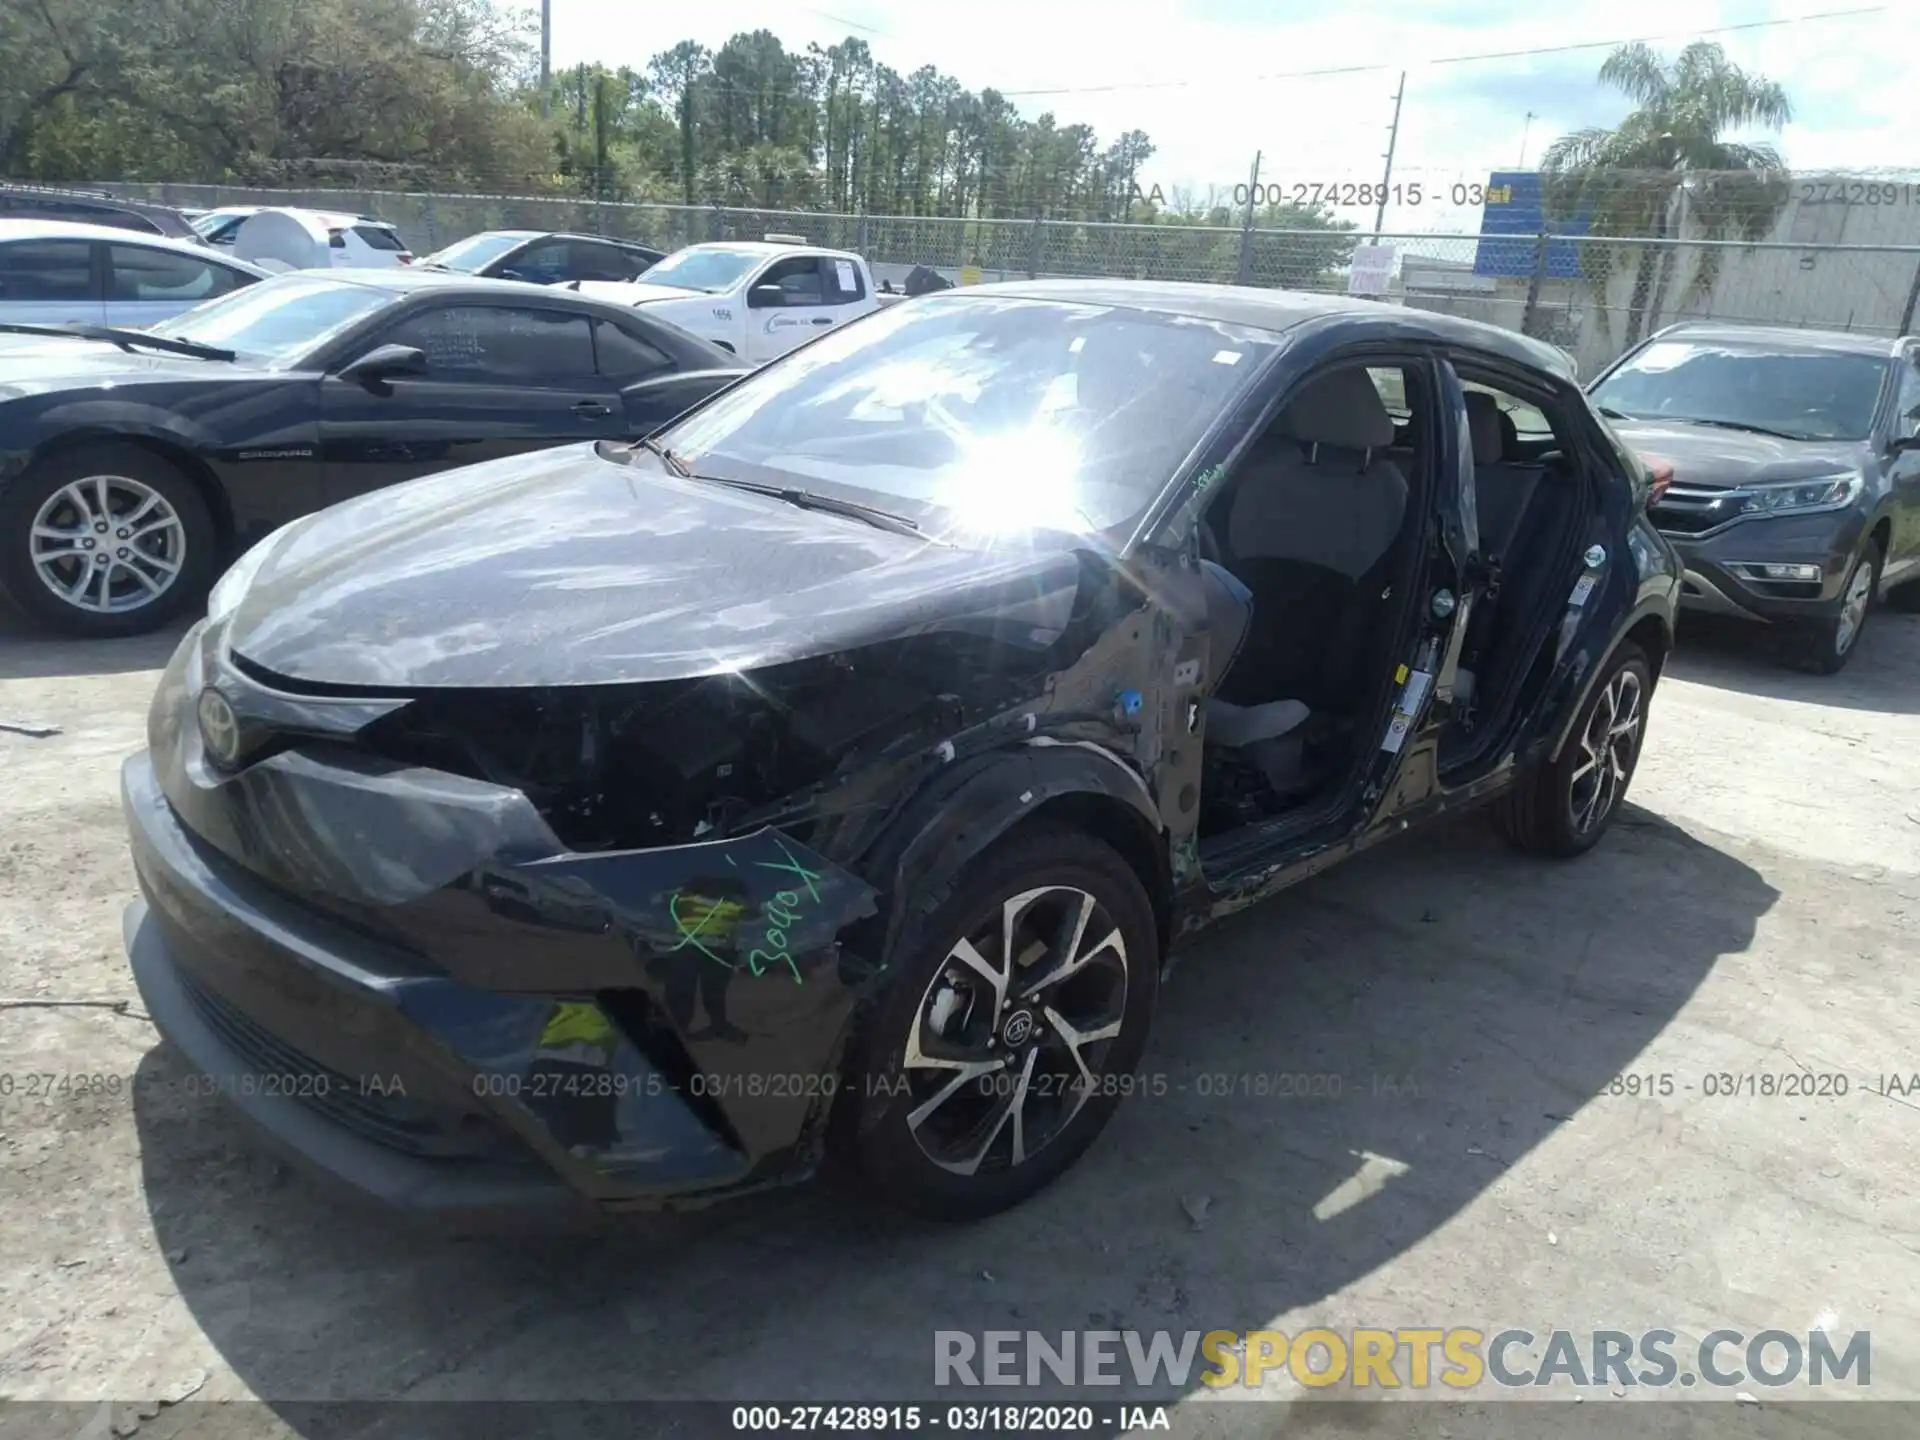 6 Photograph of a damaged car NMTKHMBX2KR075087 TOYOTA C-HR 2019